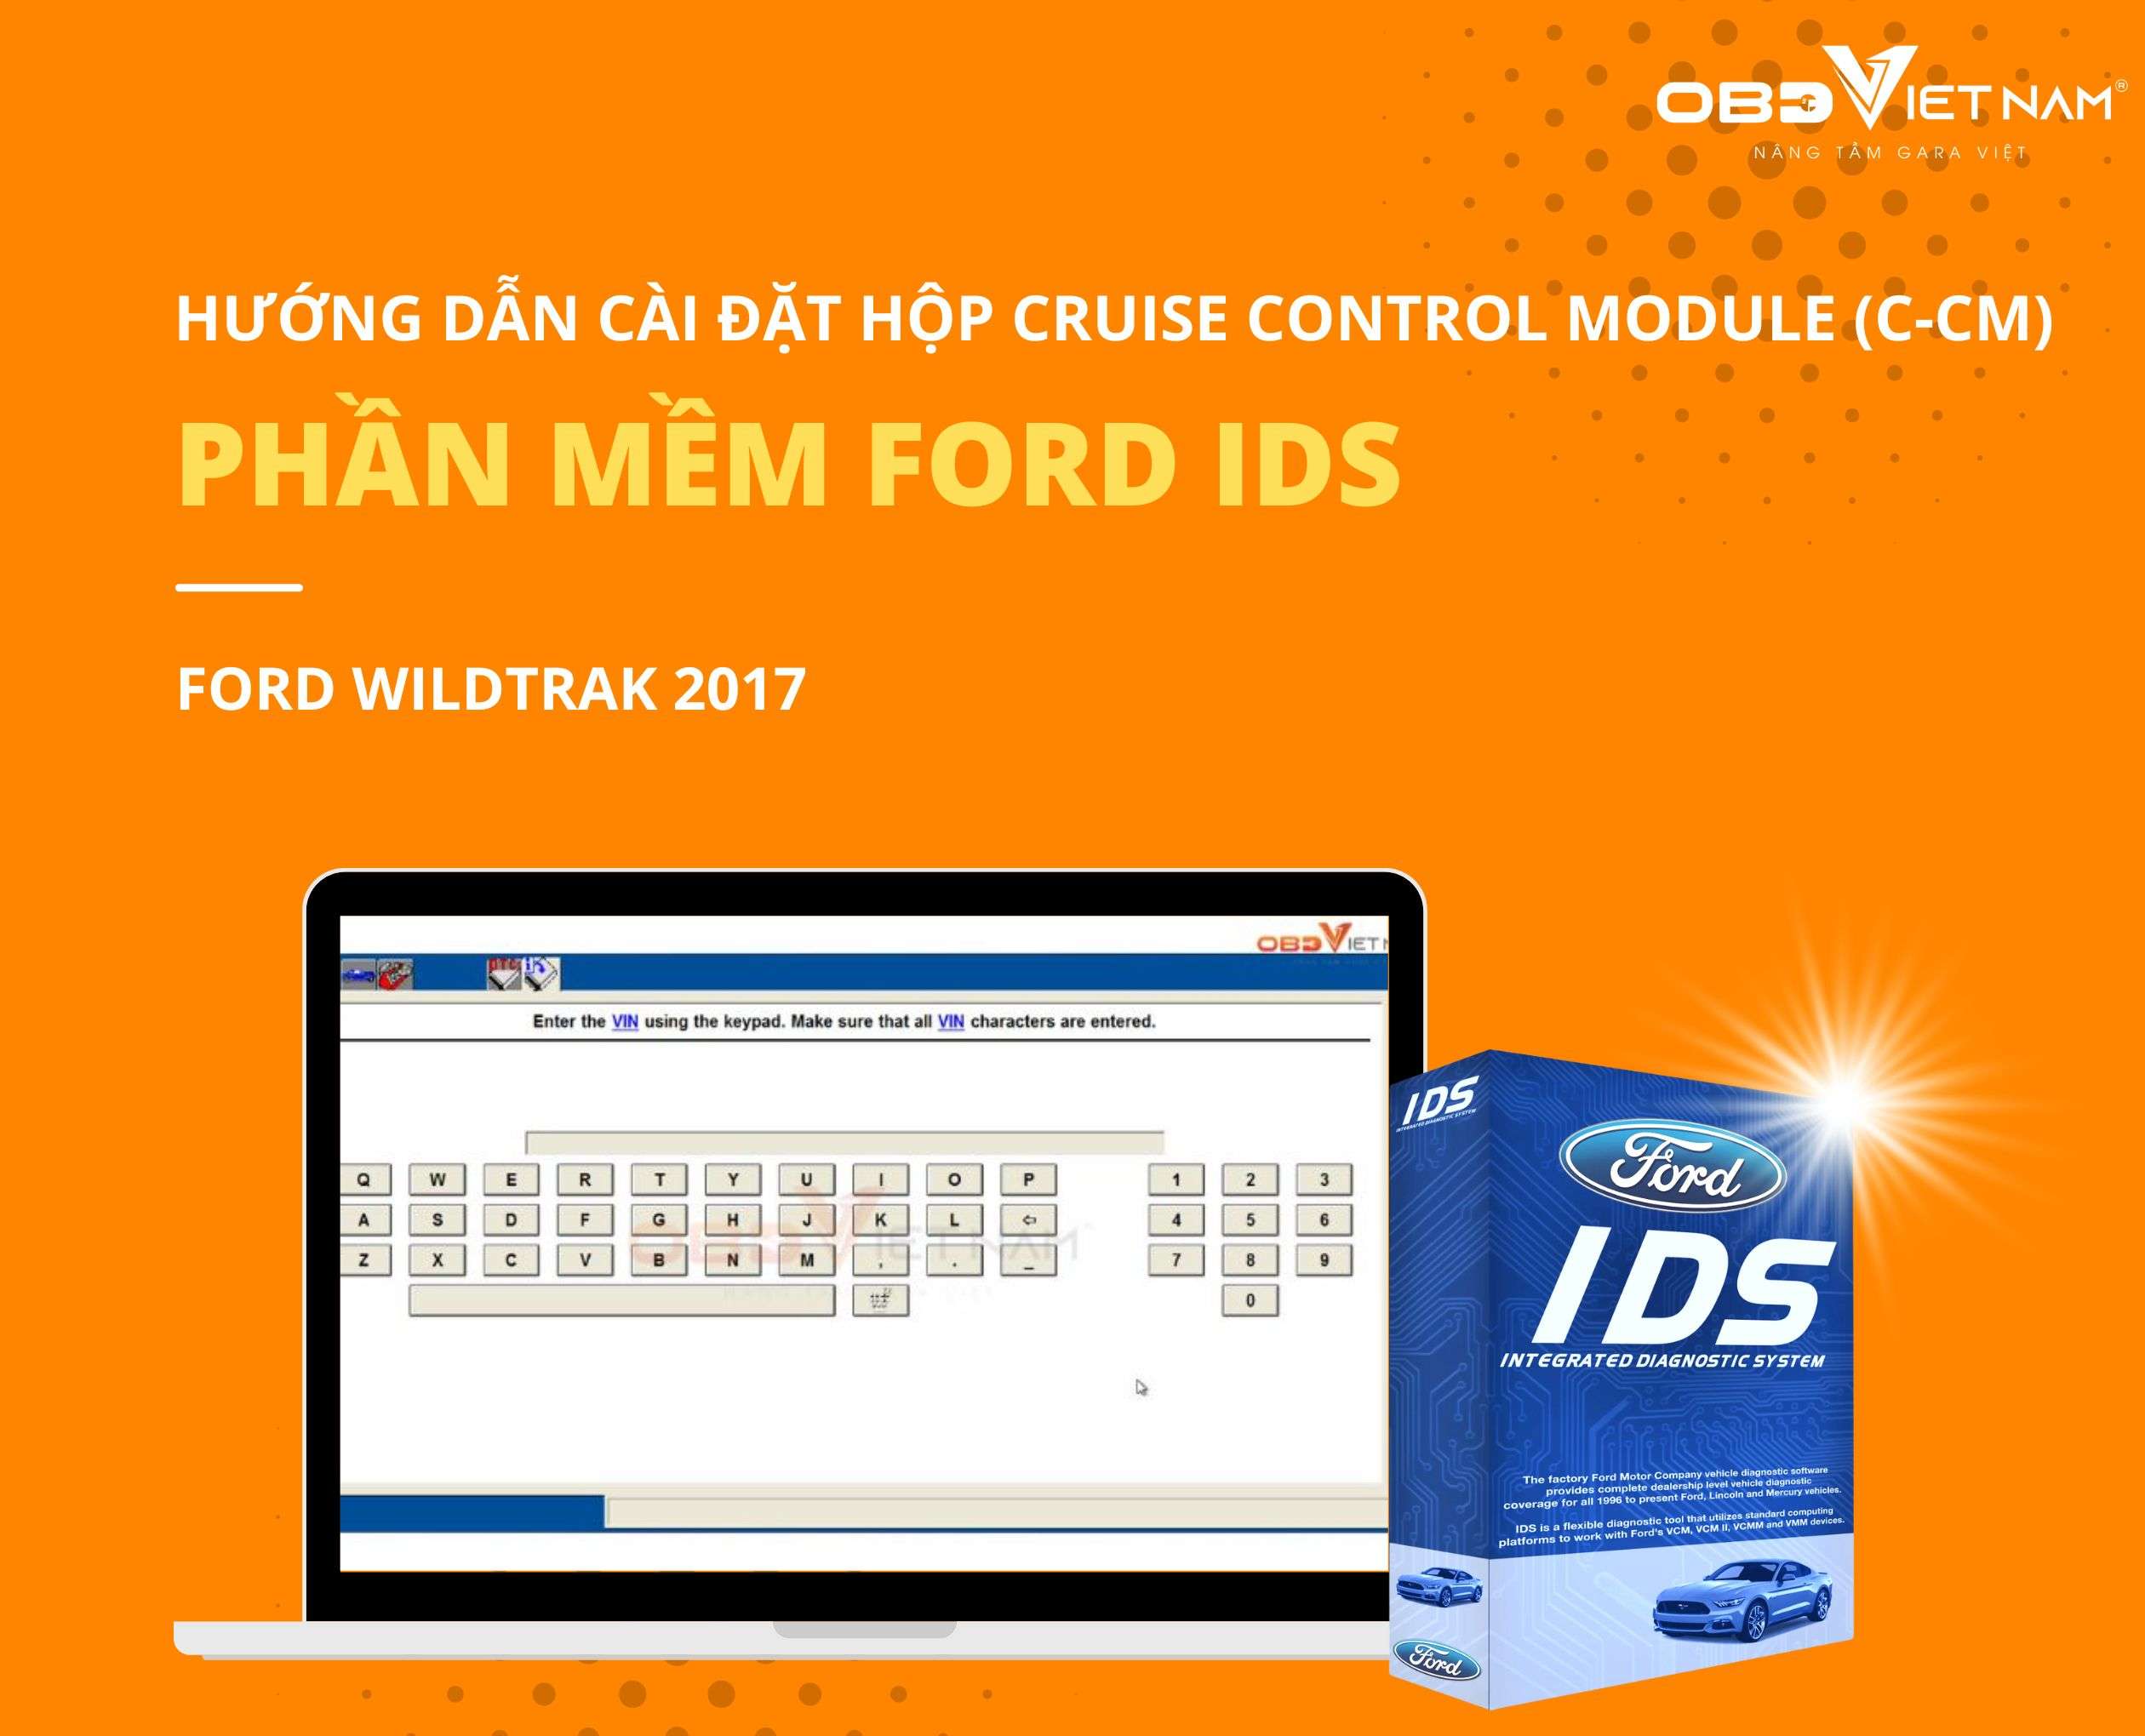 huong-dan-cai-dat-hop-cruise-control-module-c-cm-ford-wildtrak-2017-bang-phan-mem-ford (1)